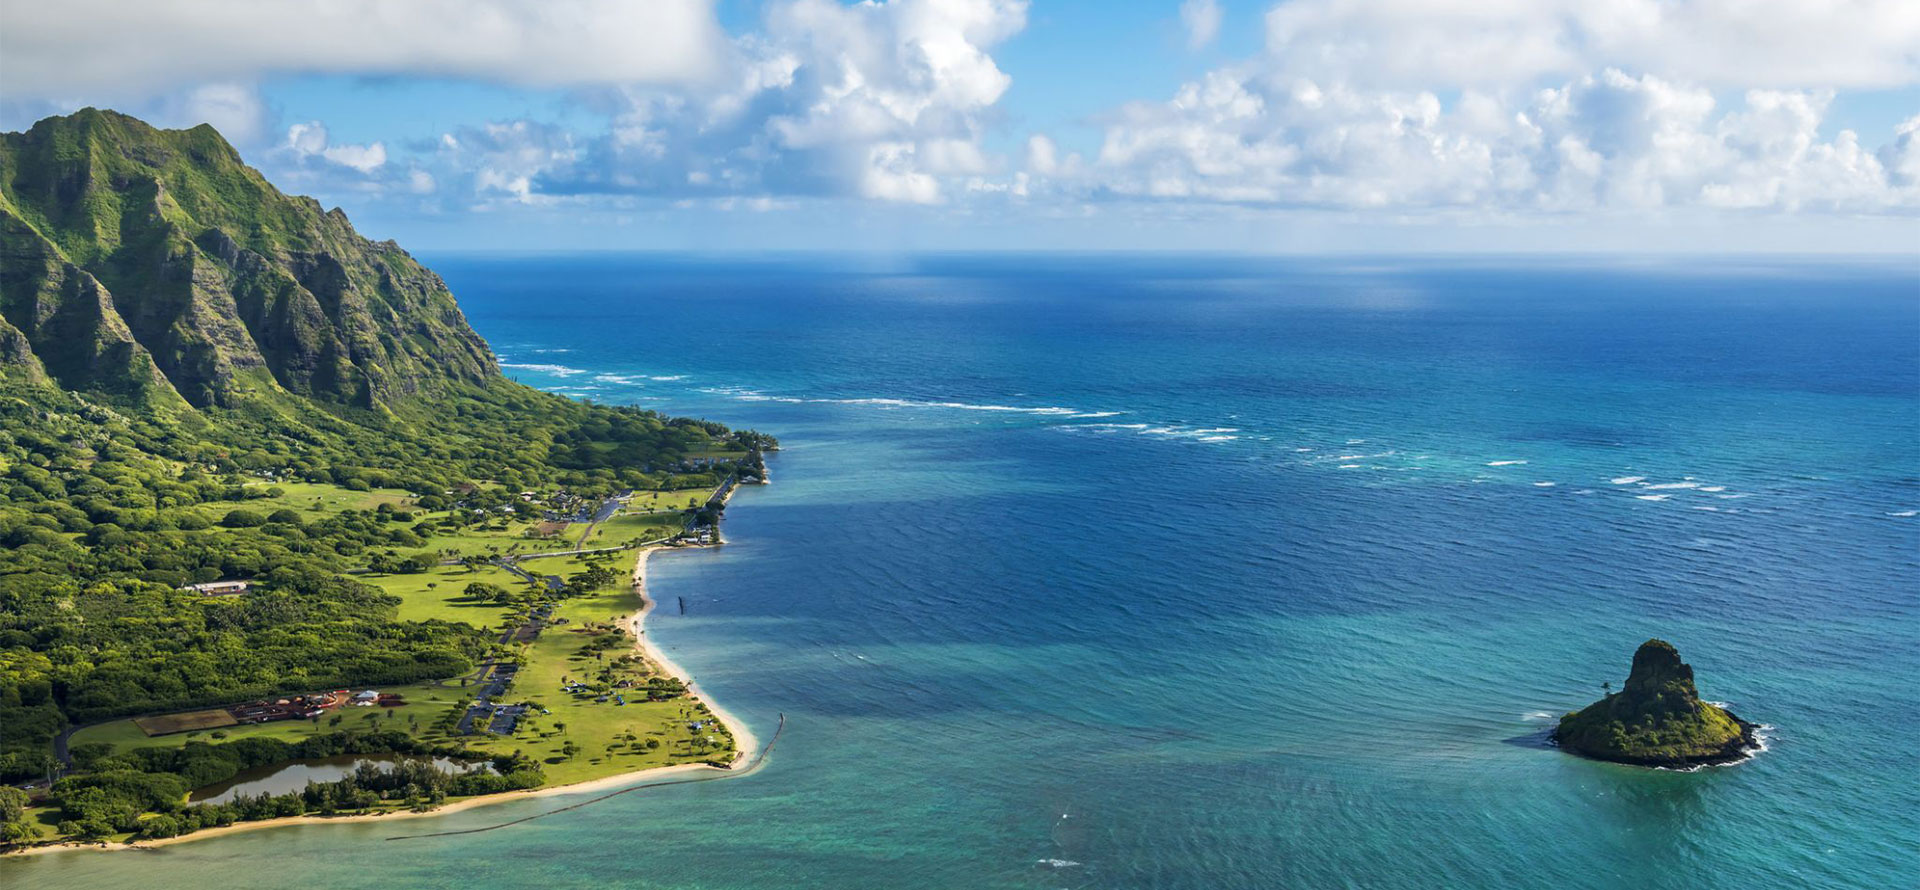 Costa Rica vs Hawaii landscape.